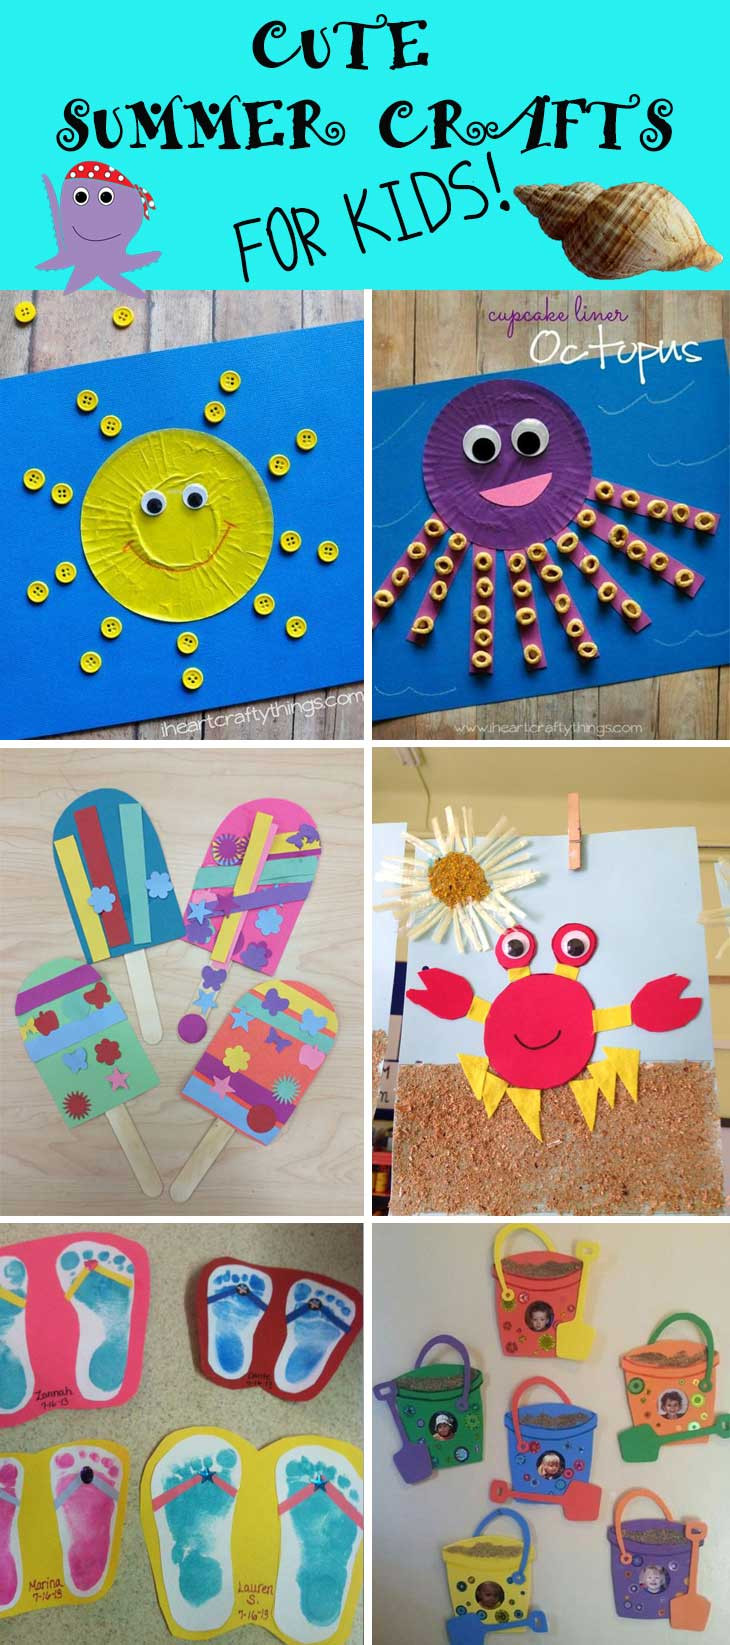 Fun Summer Crafts For Kids
 Cute Summer Crafts for Kids DIY Cuteness